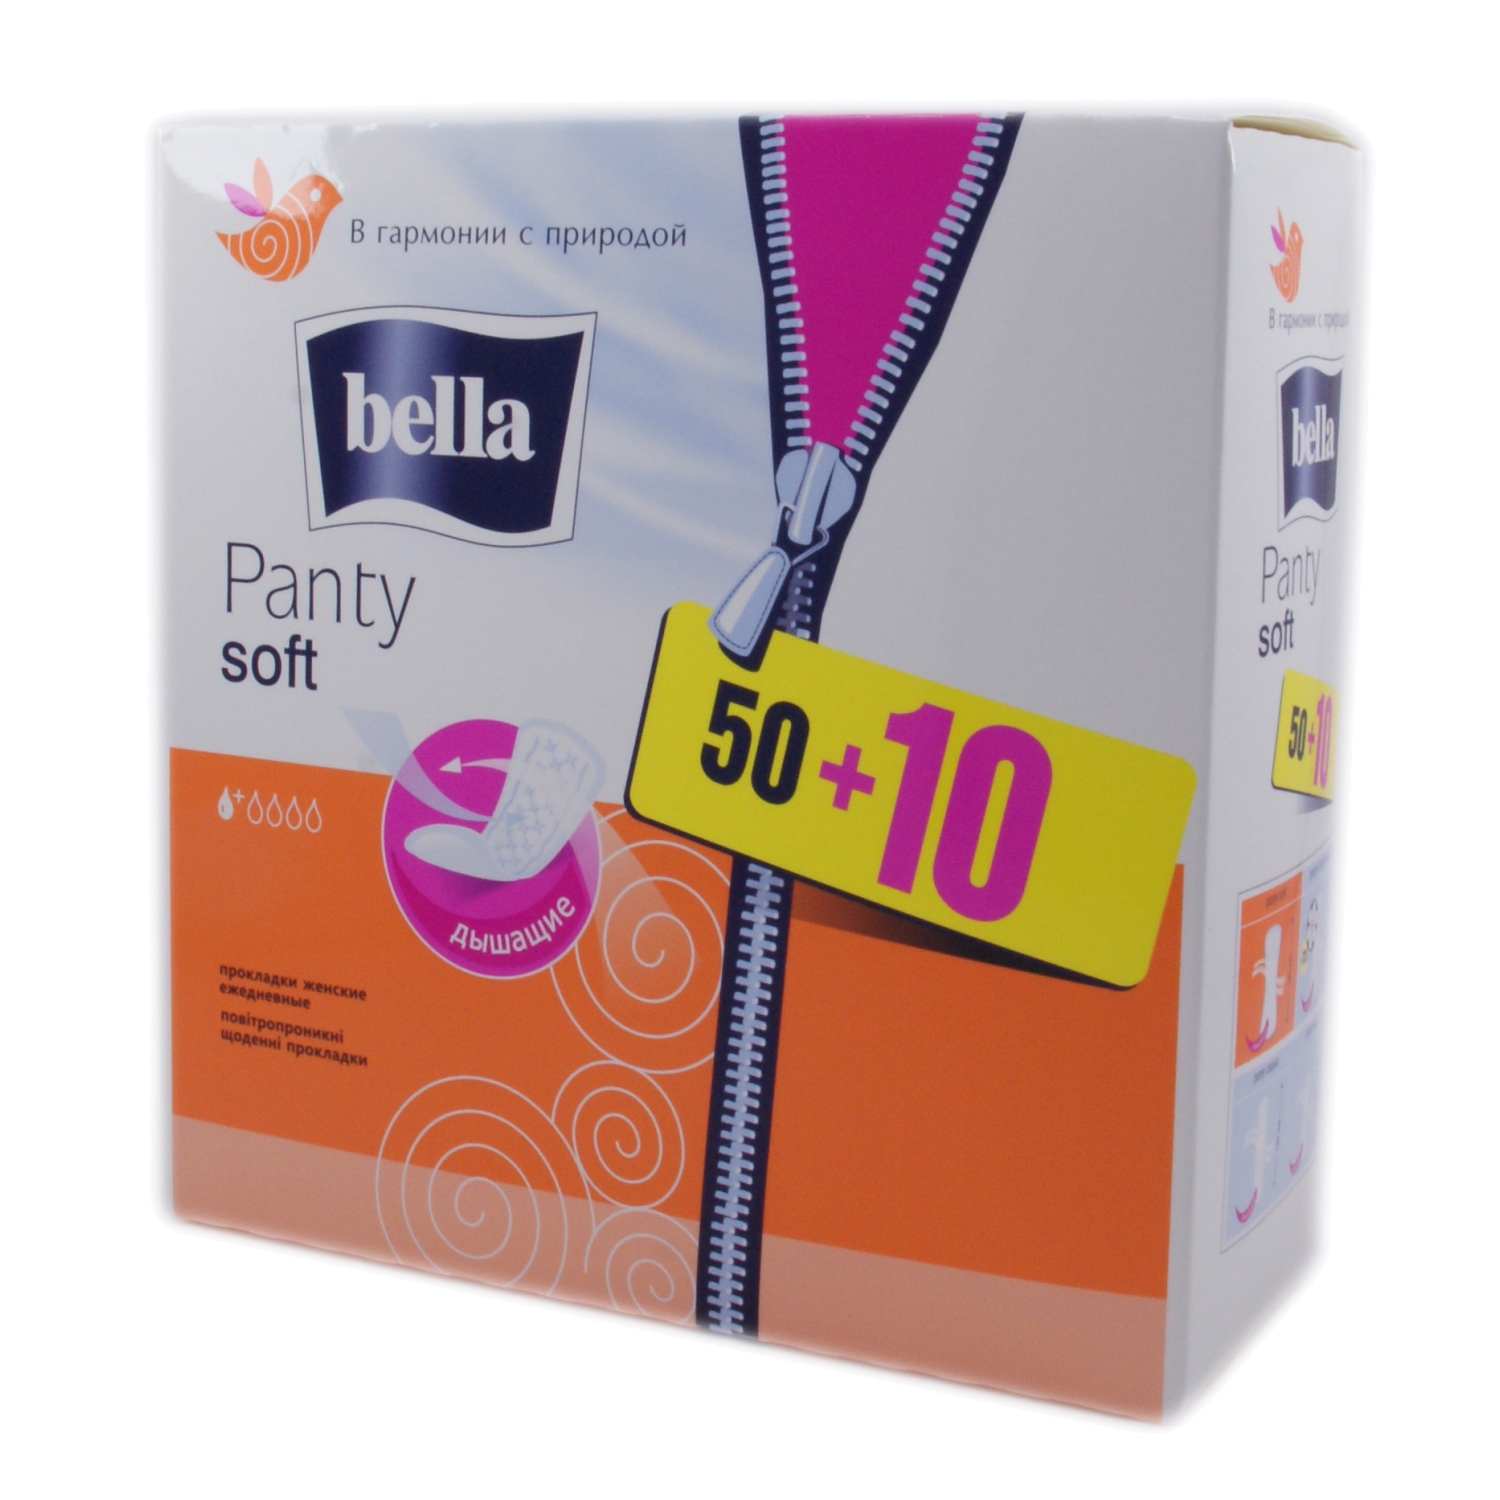 BELLA Panti Soft (50+10шт)